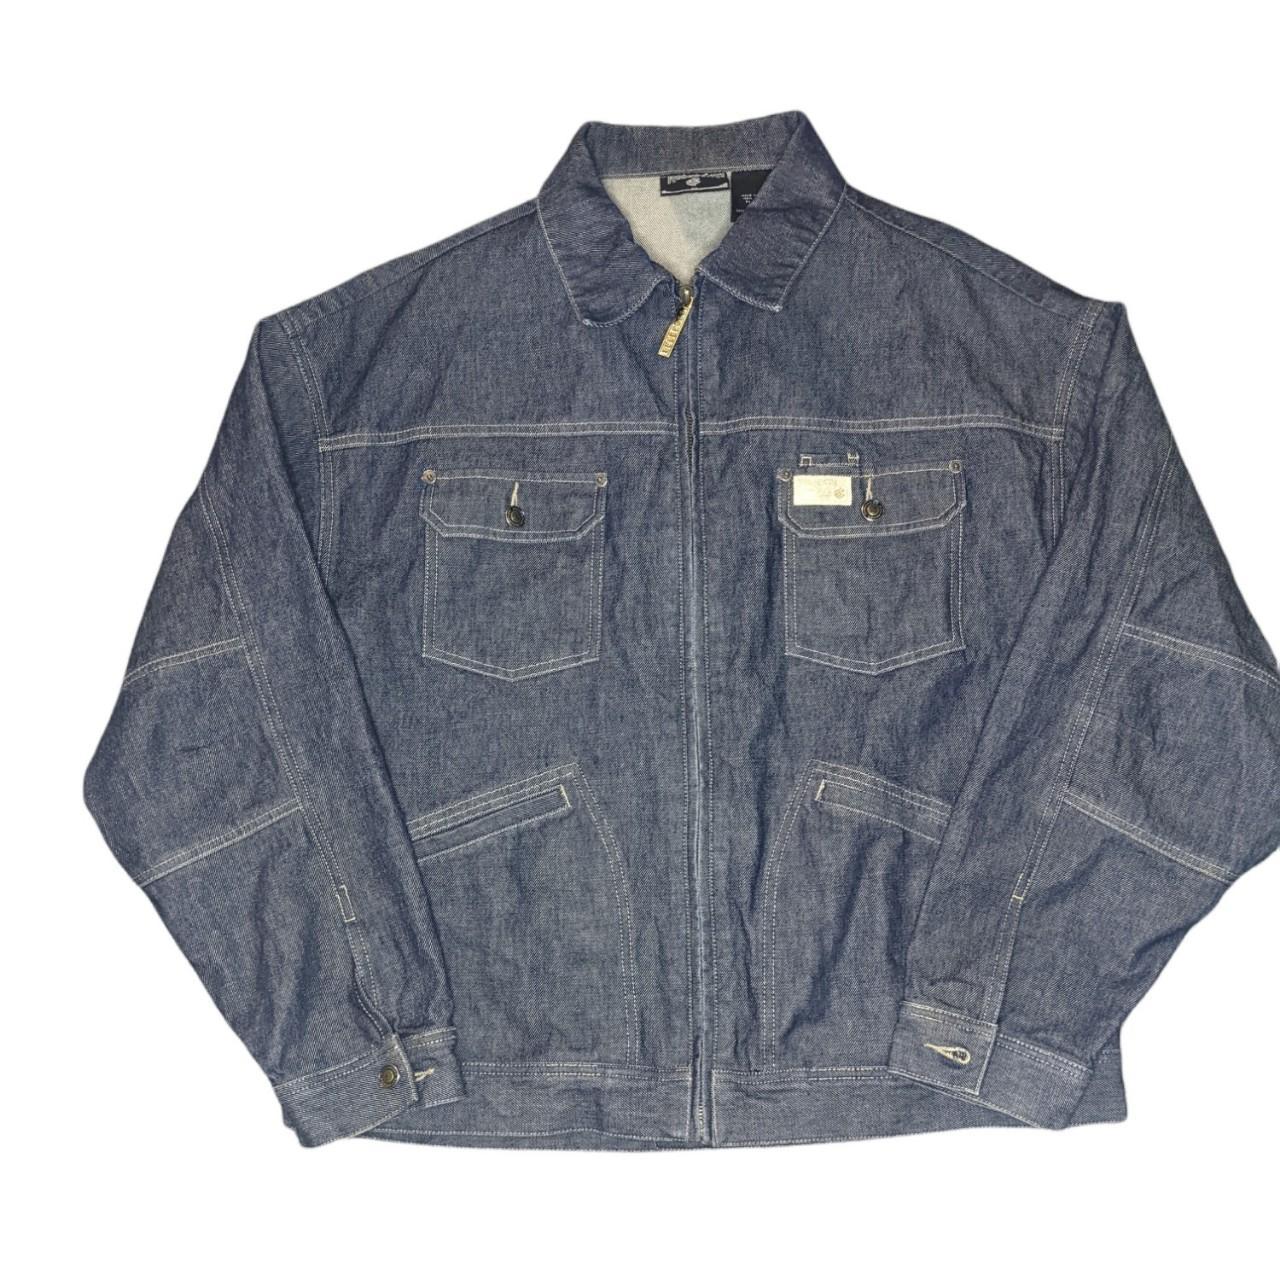 Vintage Rocawear denim jacket/ full zip up/